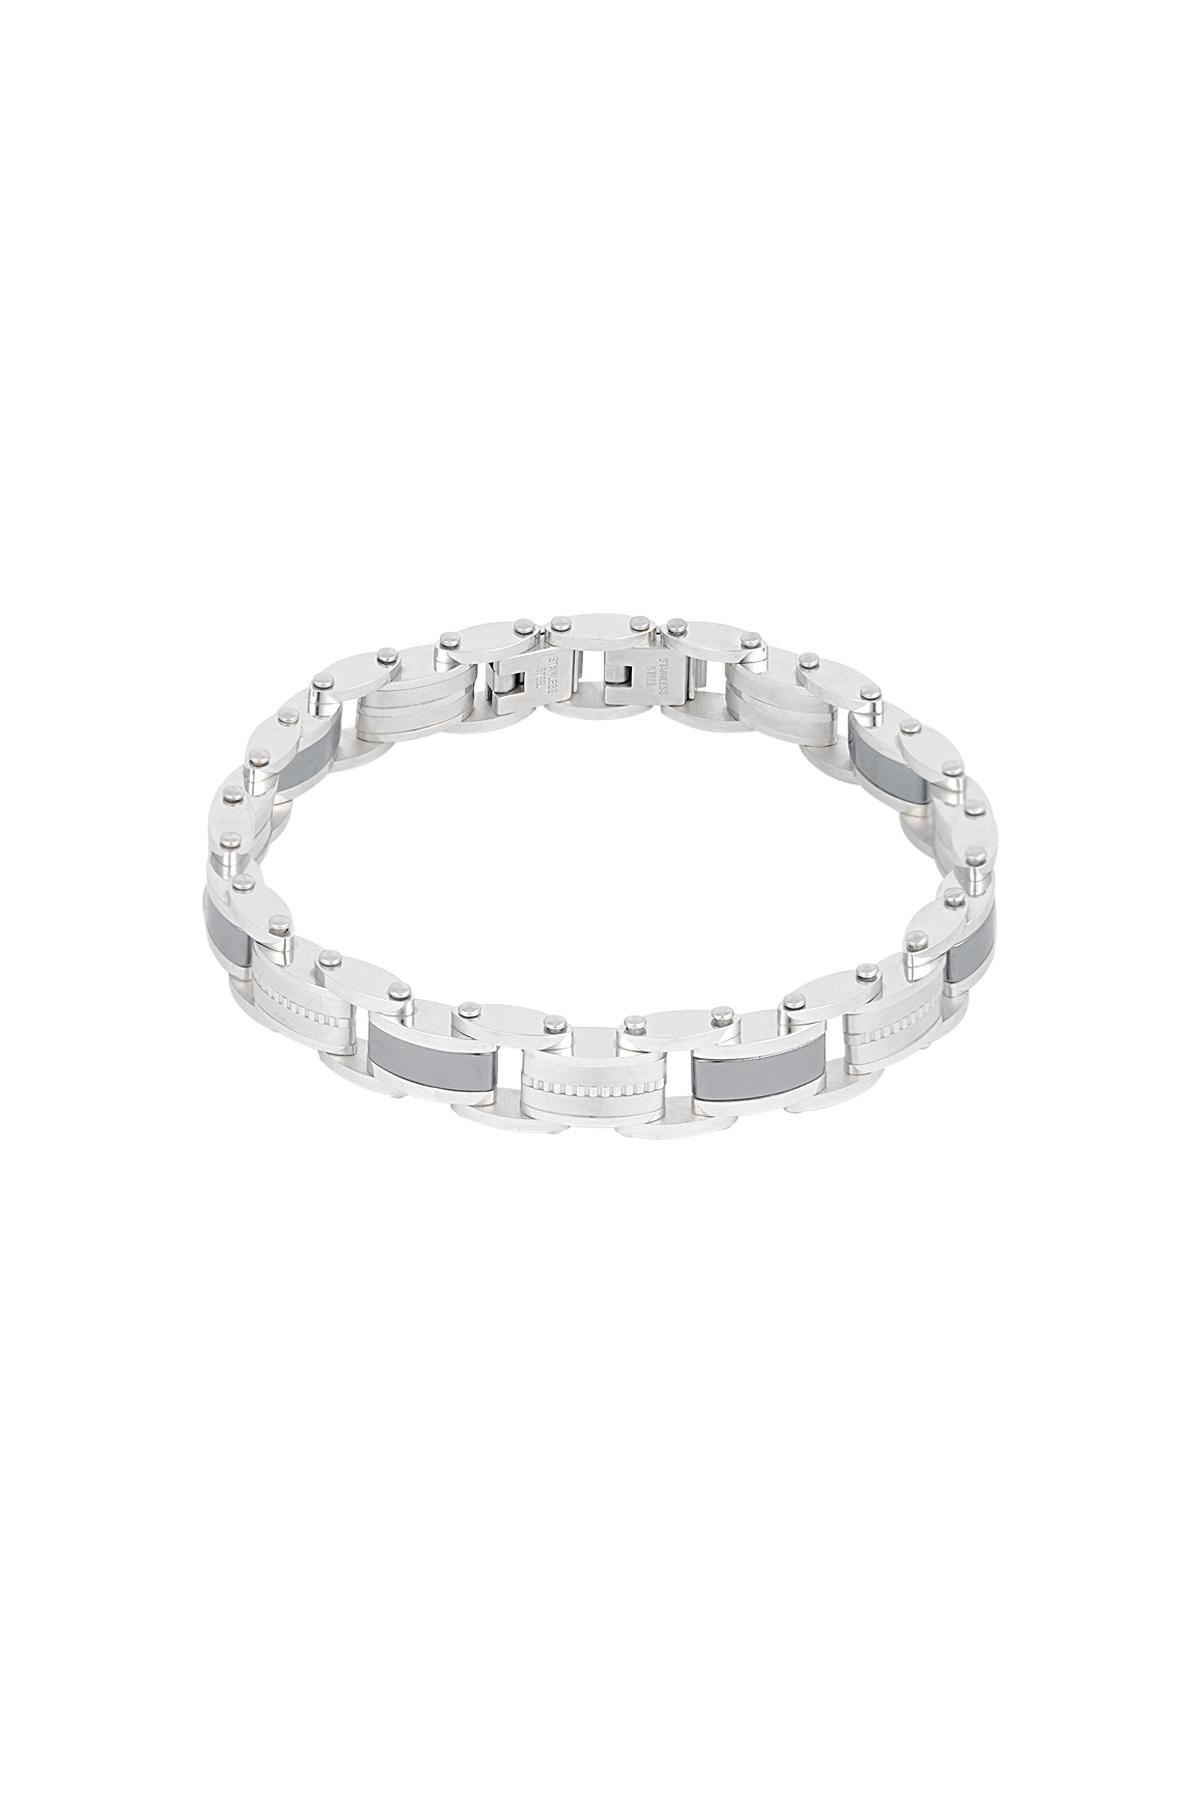 Linked steel men's bracelet - silver-1cm Picture2